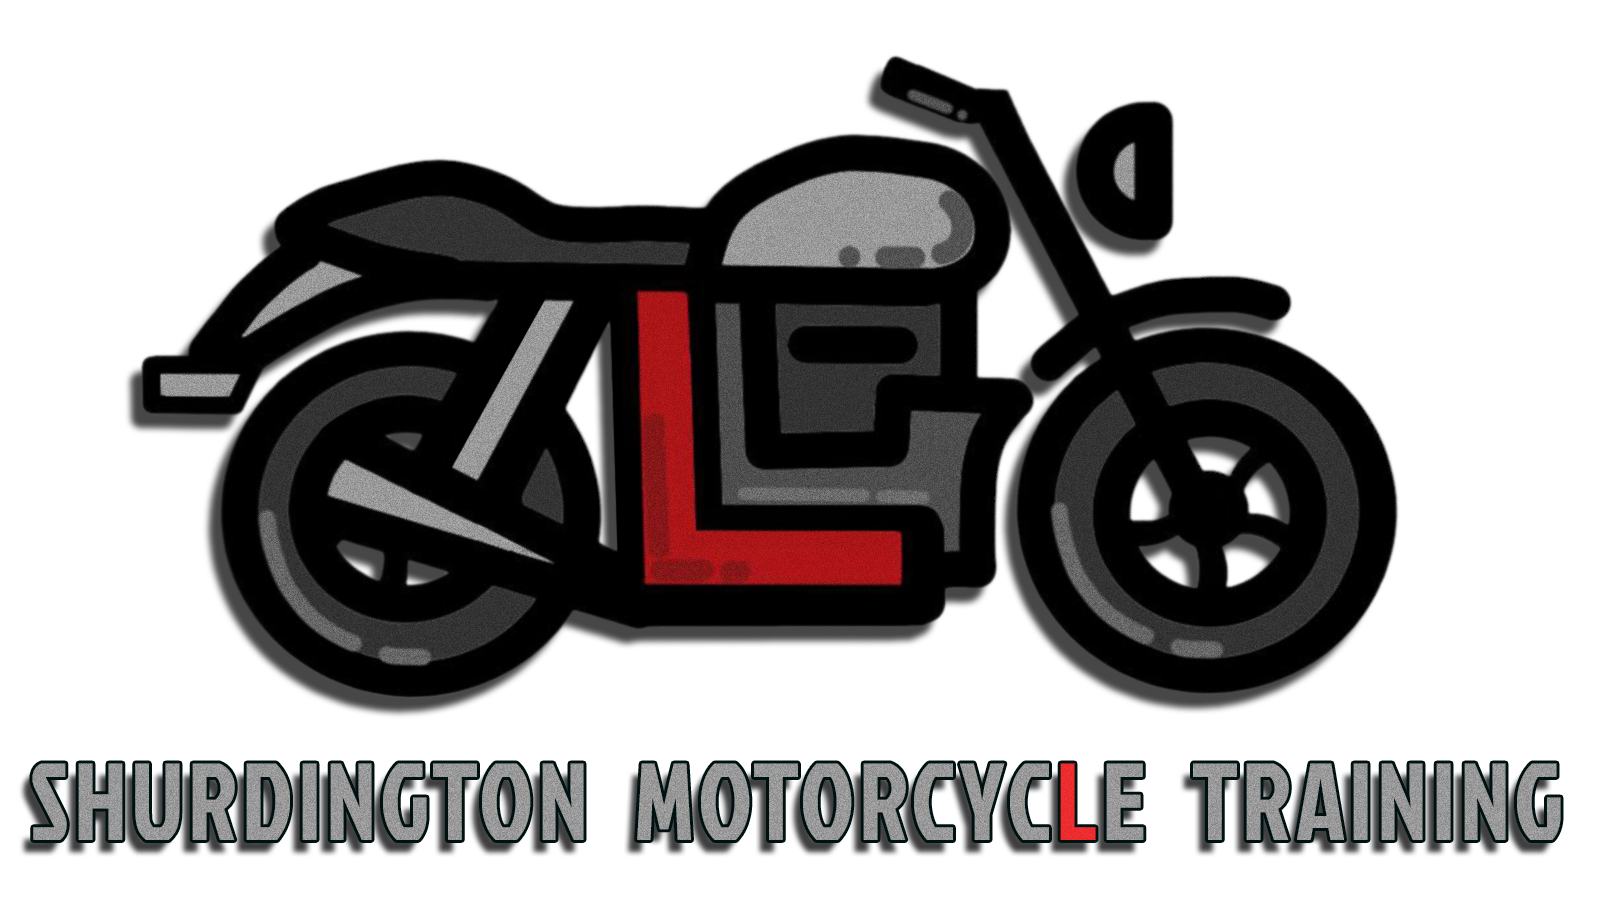 Shurdington Motorcycle Training in Shurdington